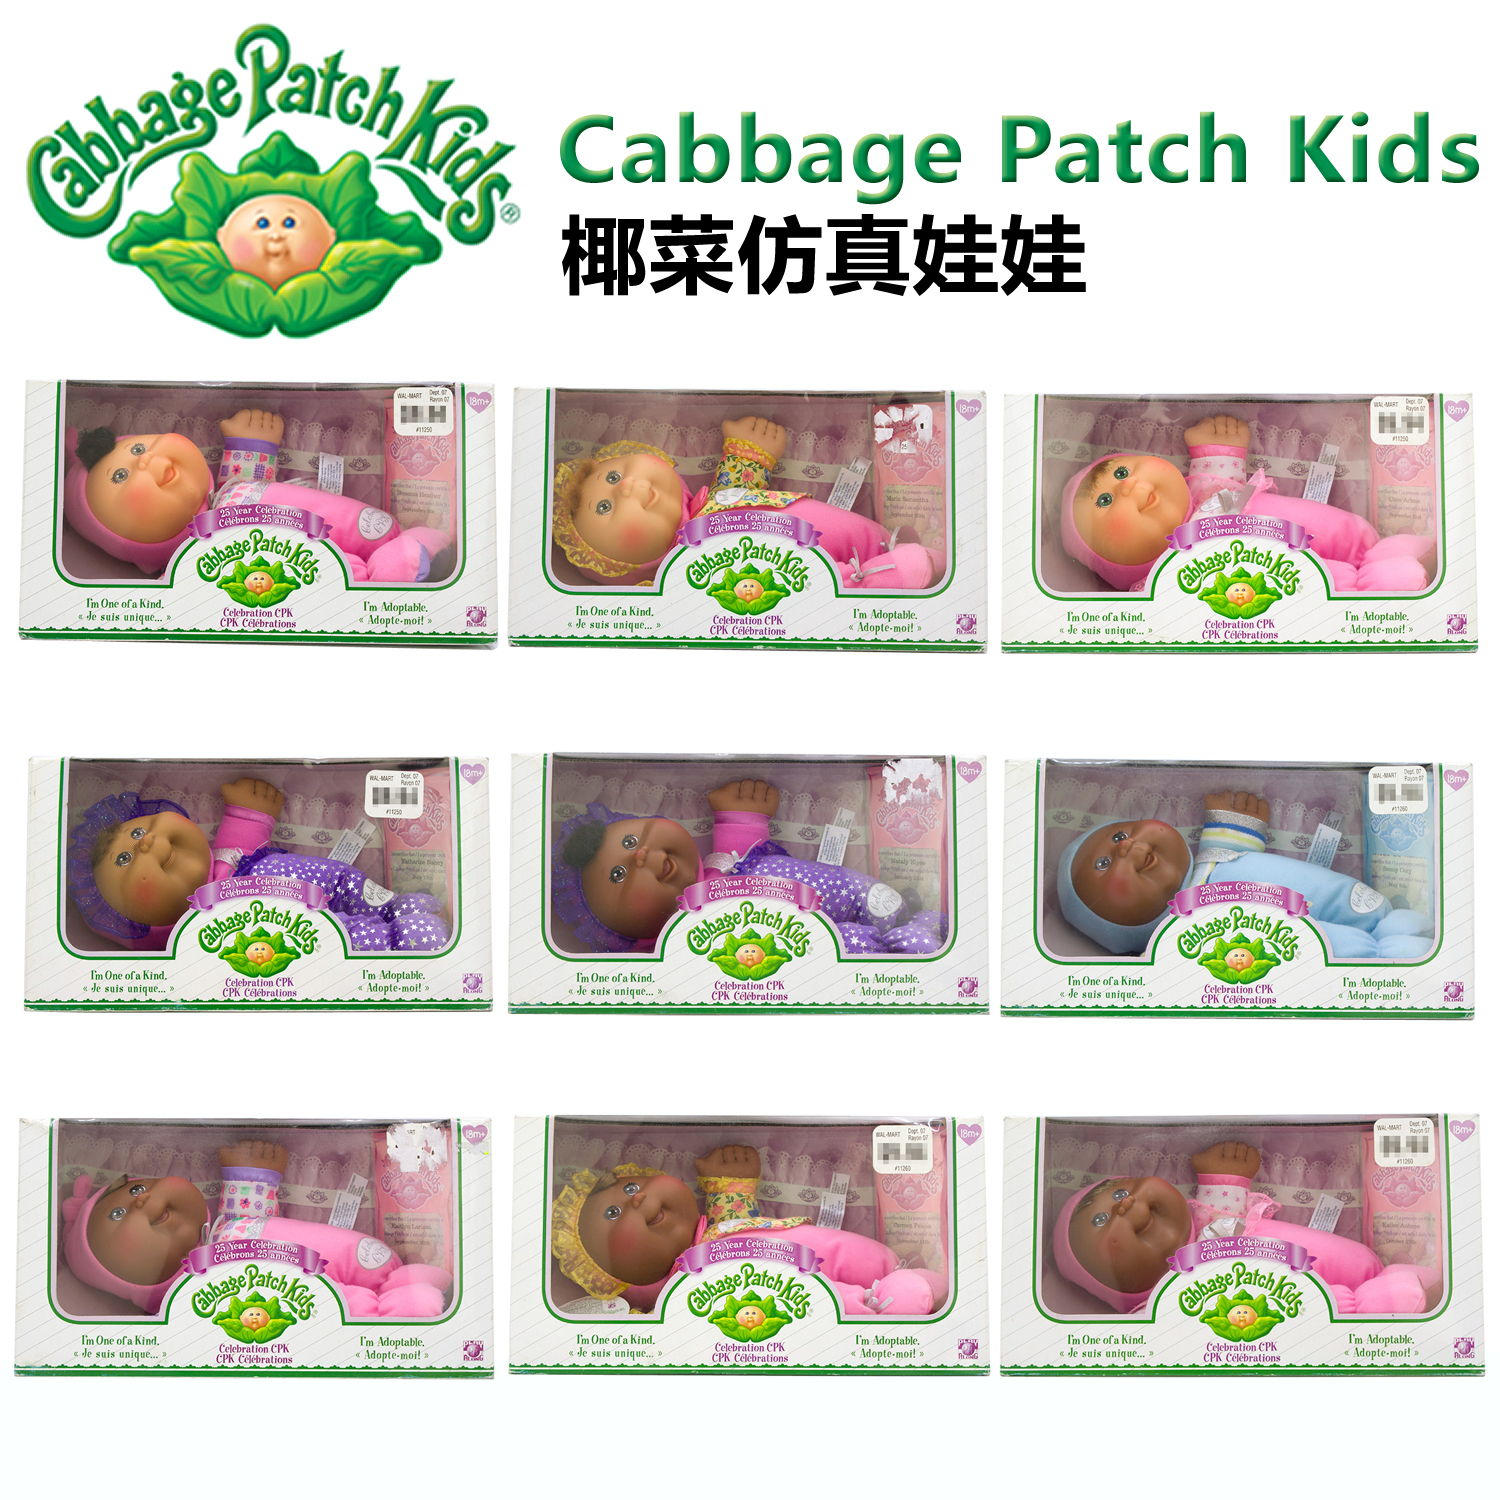 Cabbage Patch Kids 椰菜娃娃 25周年纪念版 带香味手抱仿真娃娃 玩具/童车/益智/积木/模型 娃娃/配件/着替 原图主图